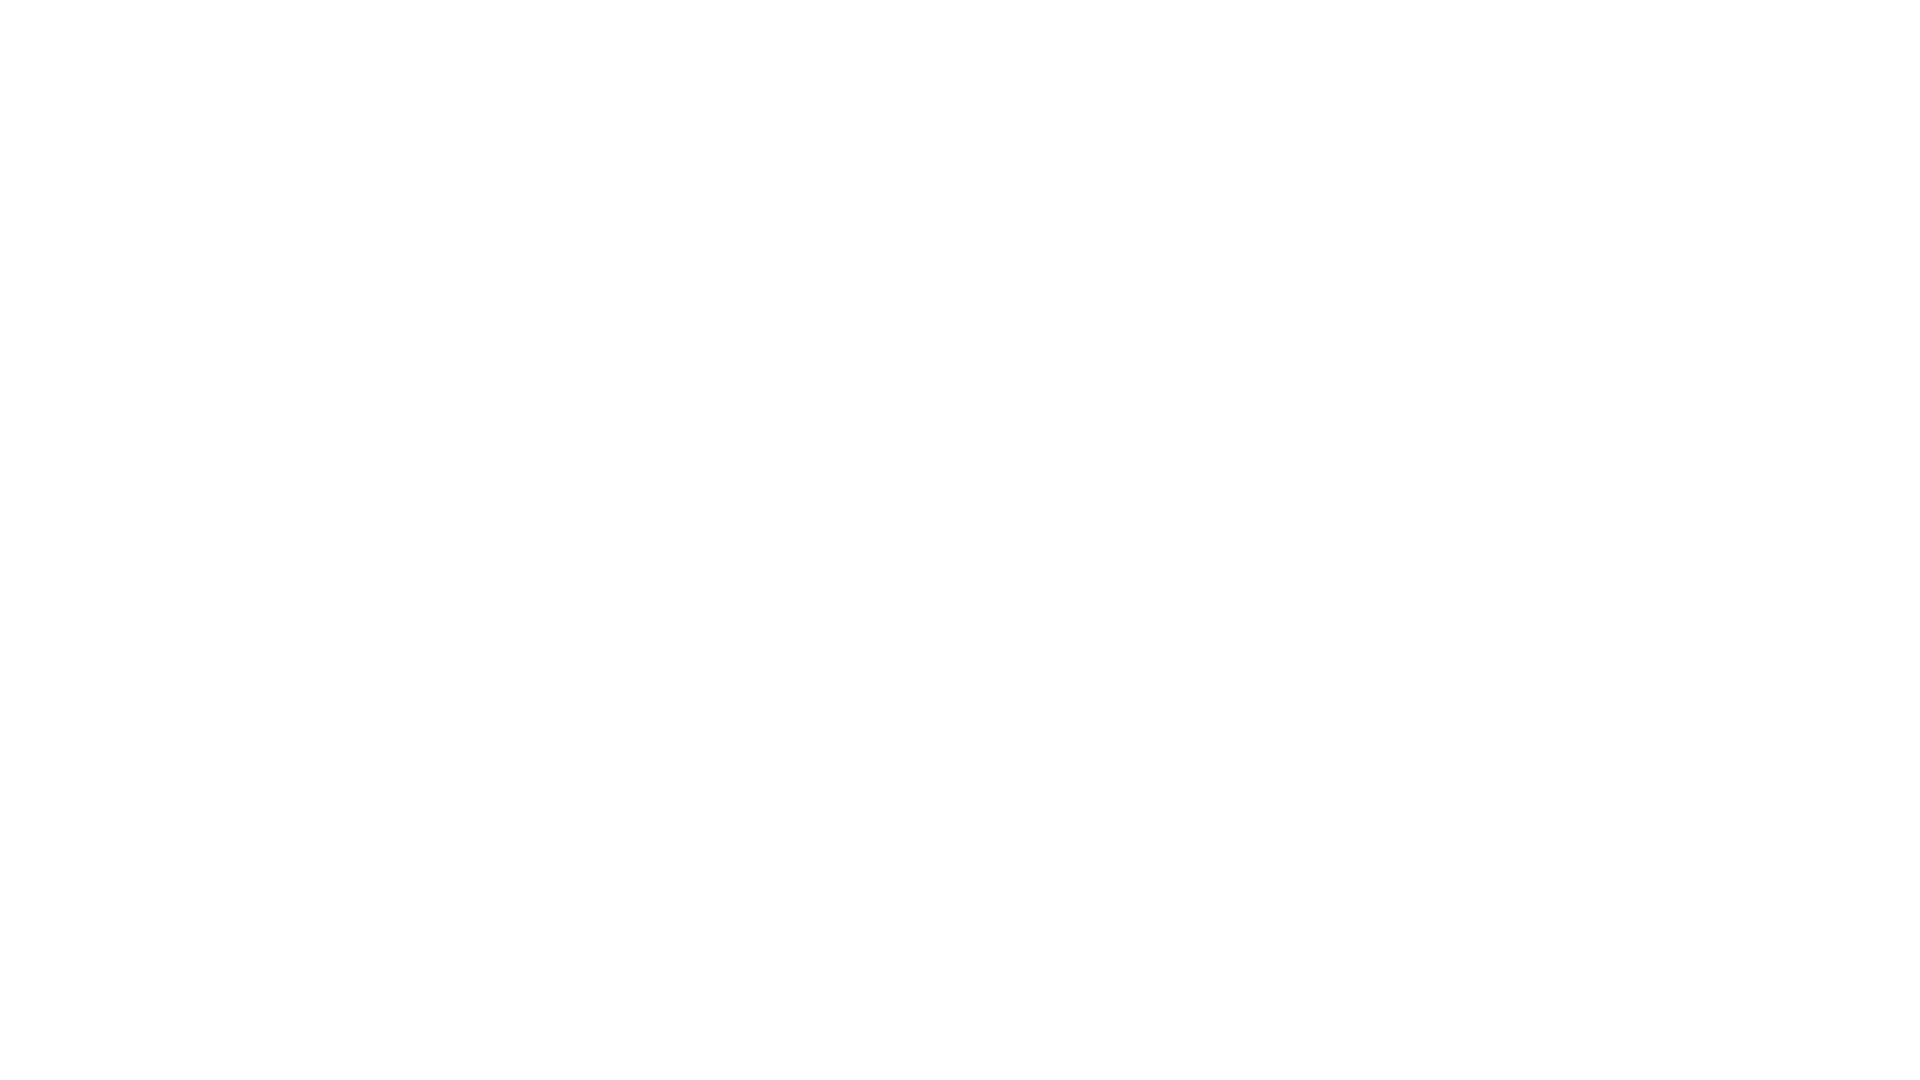 HoGent